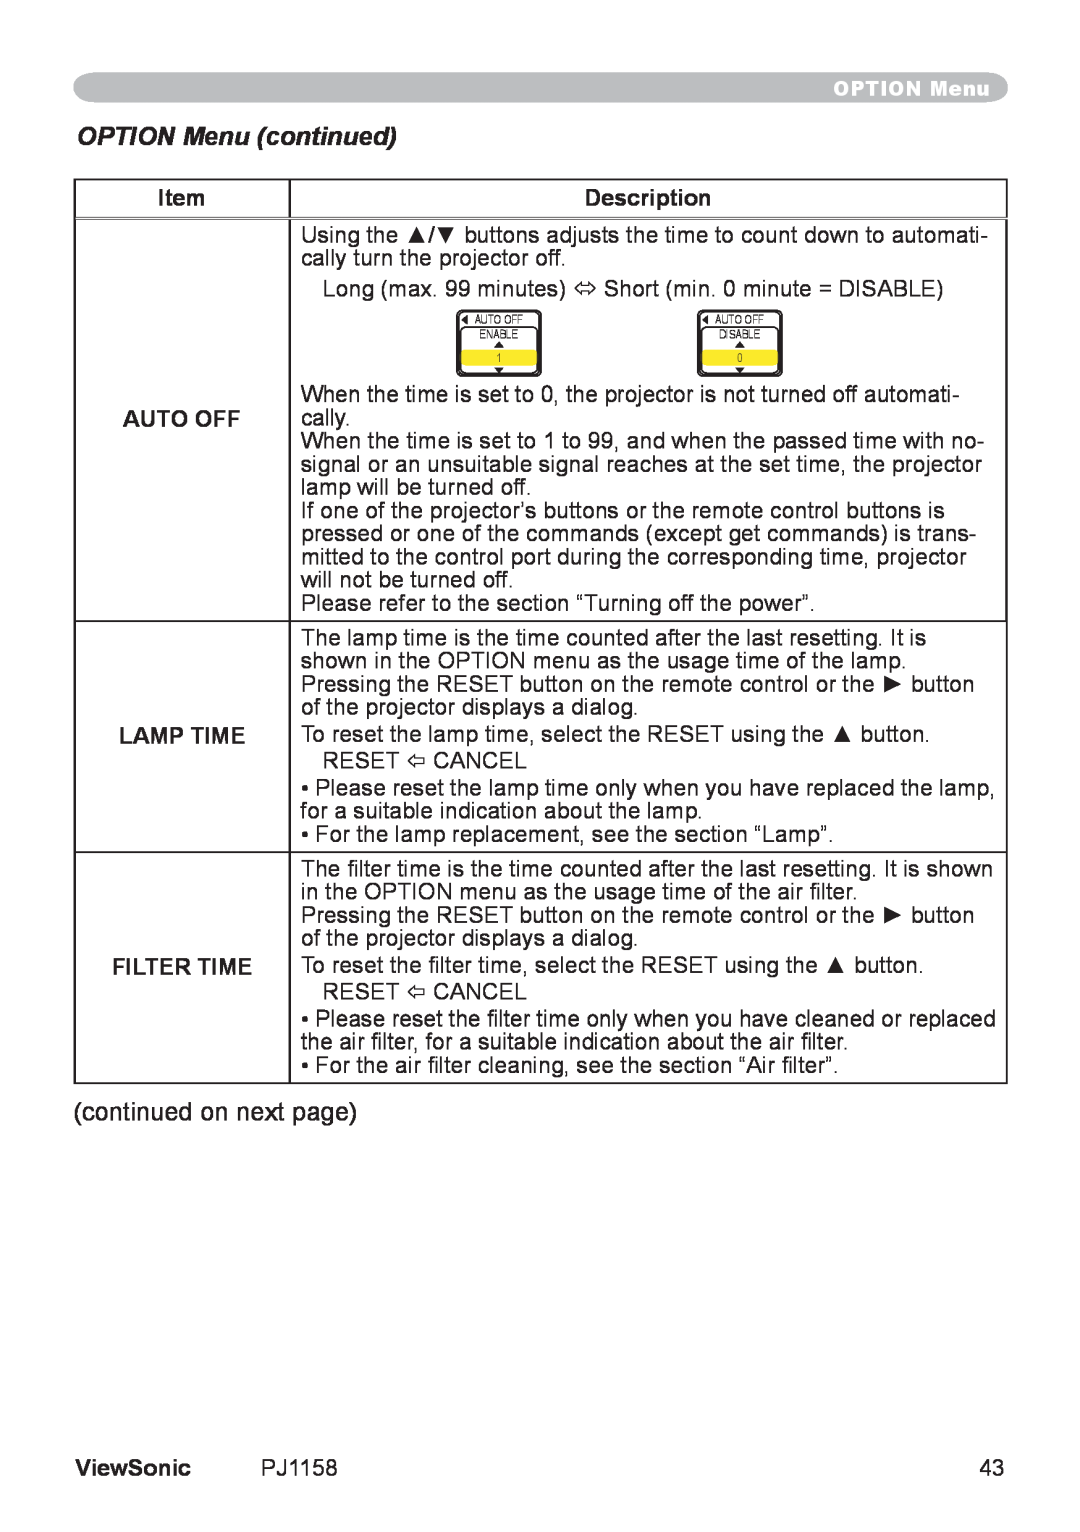 ViewSonic PJ1158 manual OPTION Menu continued, Description, Auto Off, Lamp Time, Filter Time, ViewSonic 